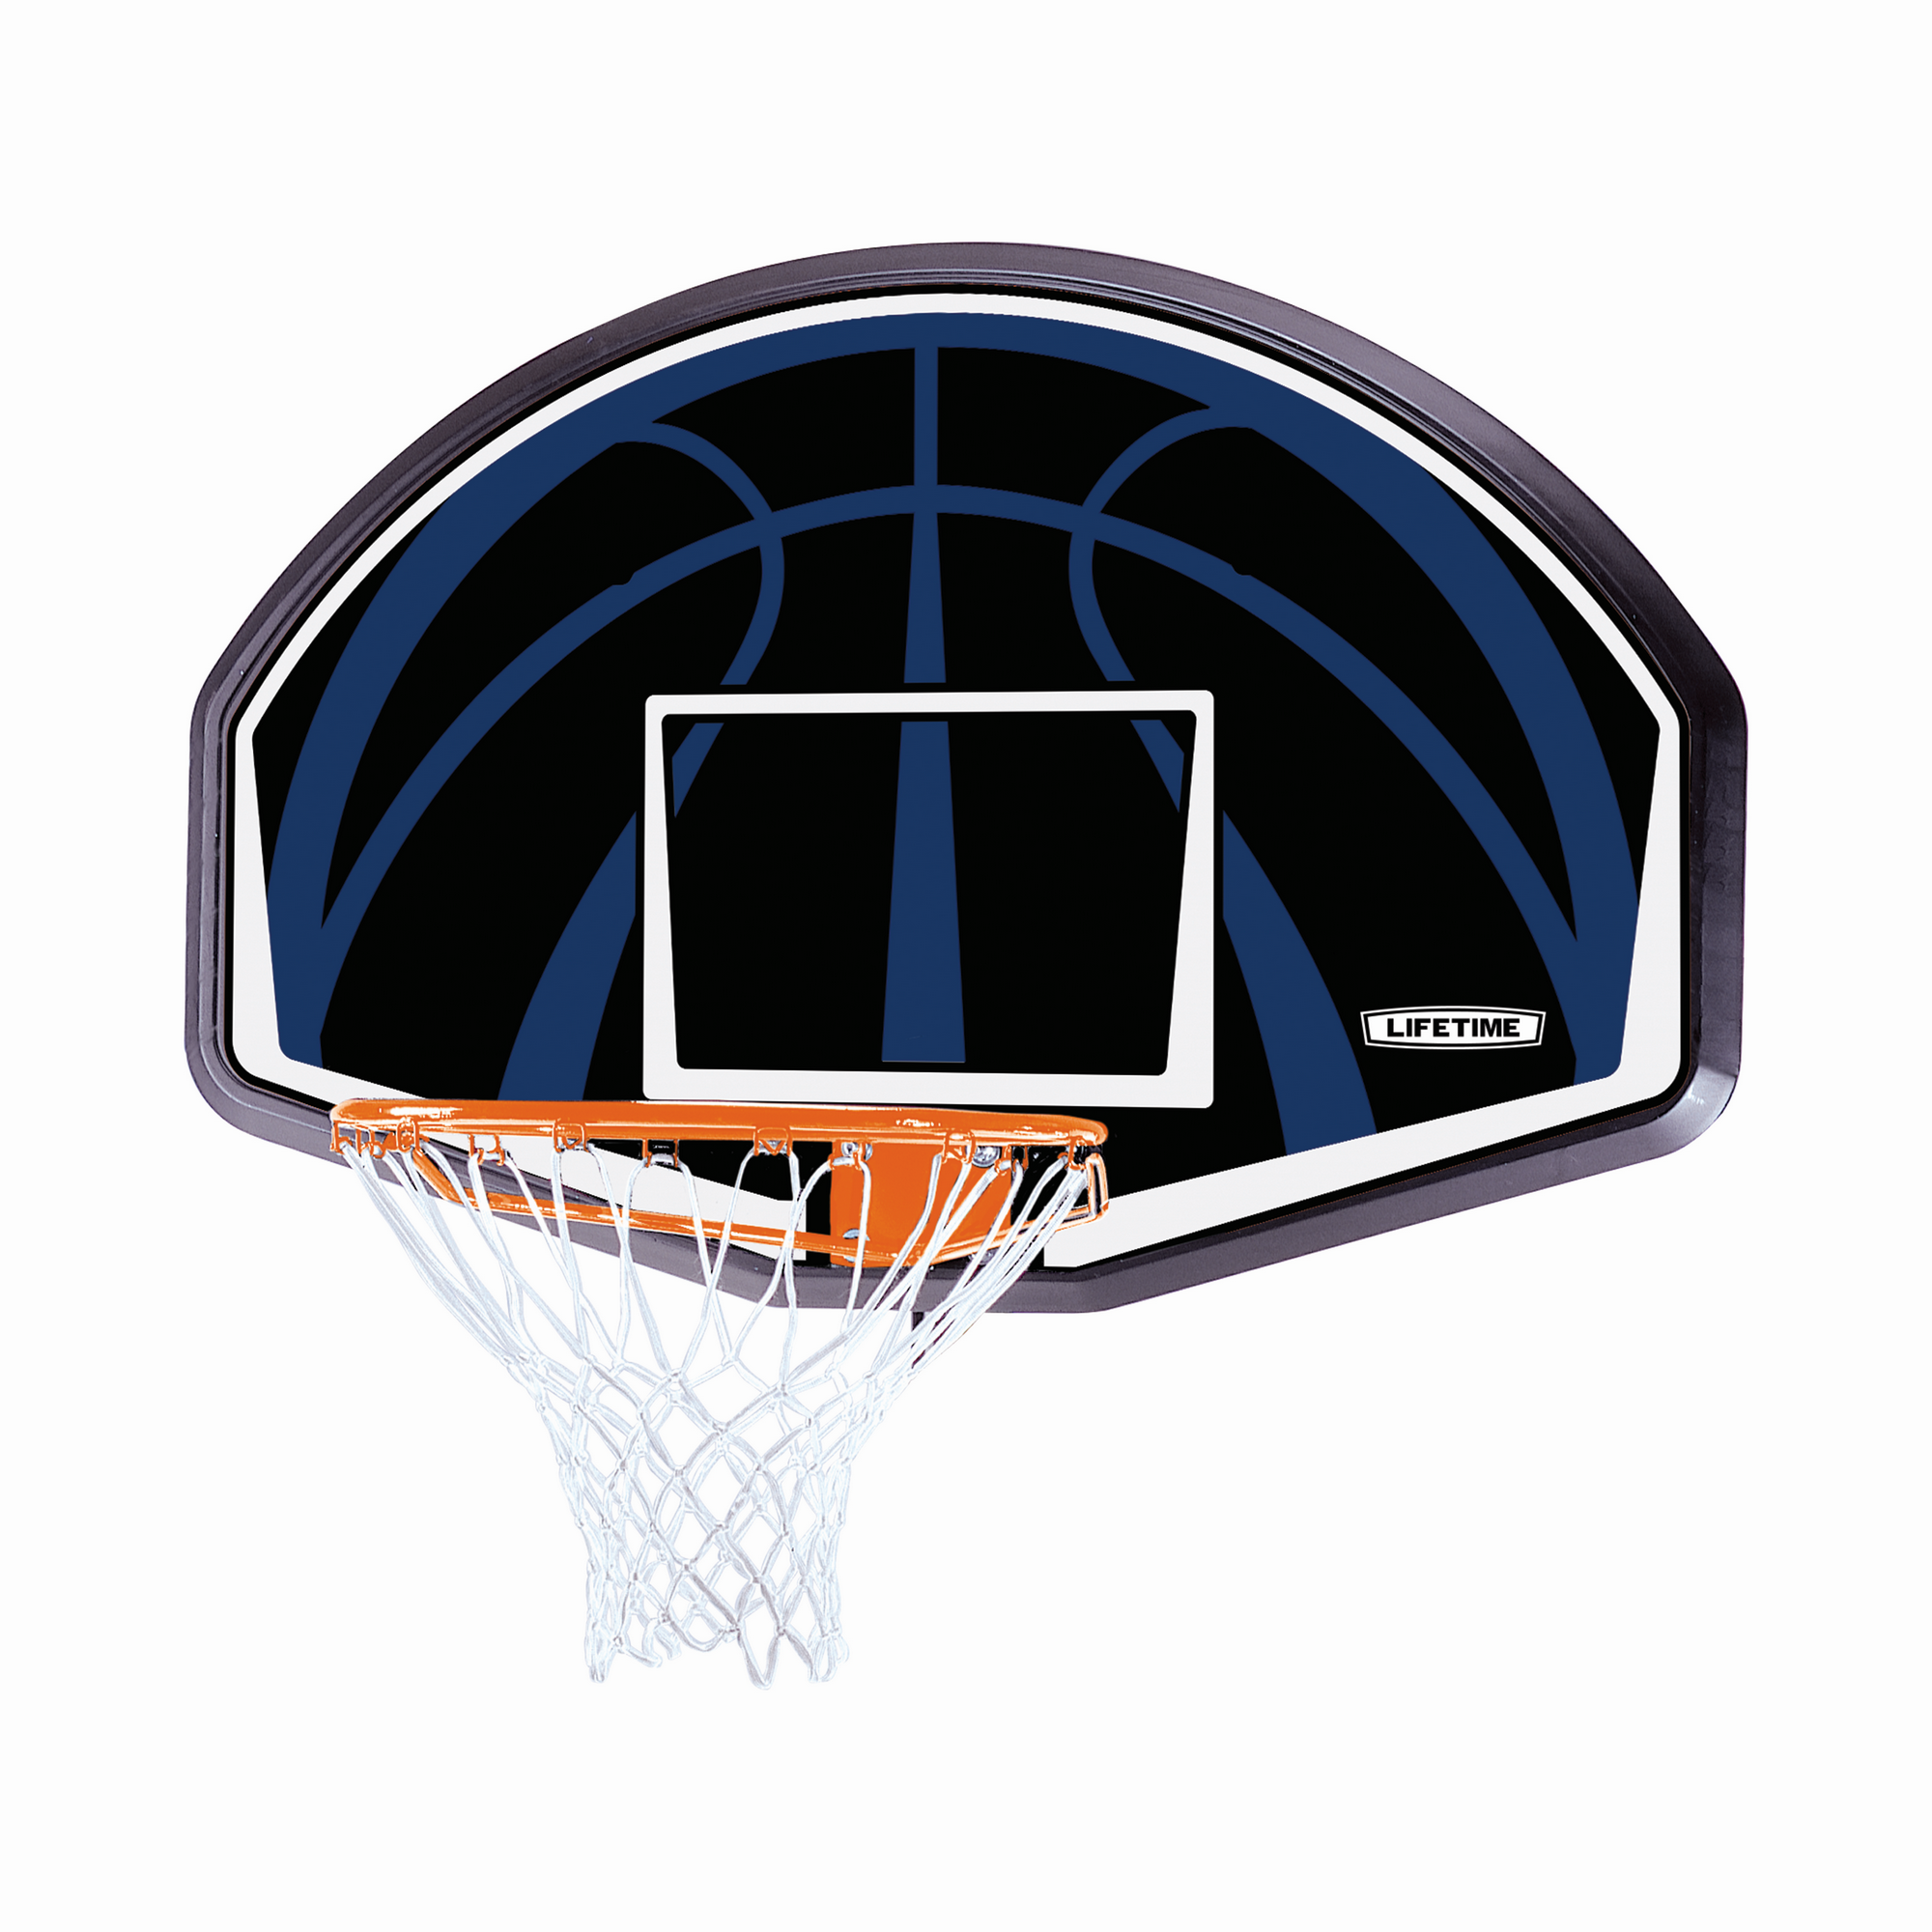 Basketballkorb 'Colorado' schwarz/blau 112 x 72 x 3 cm + product picture